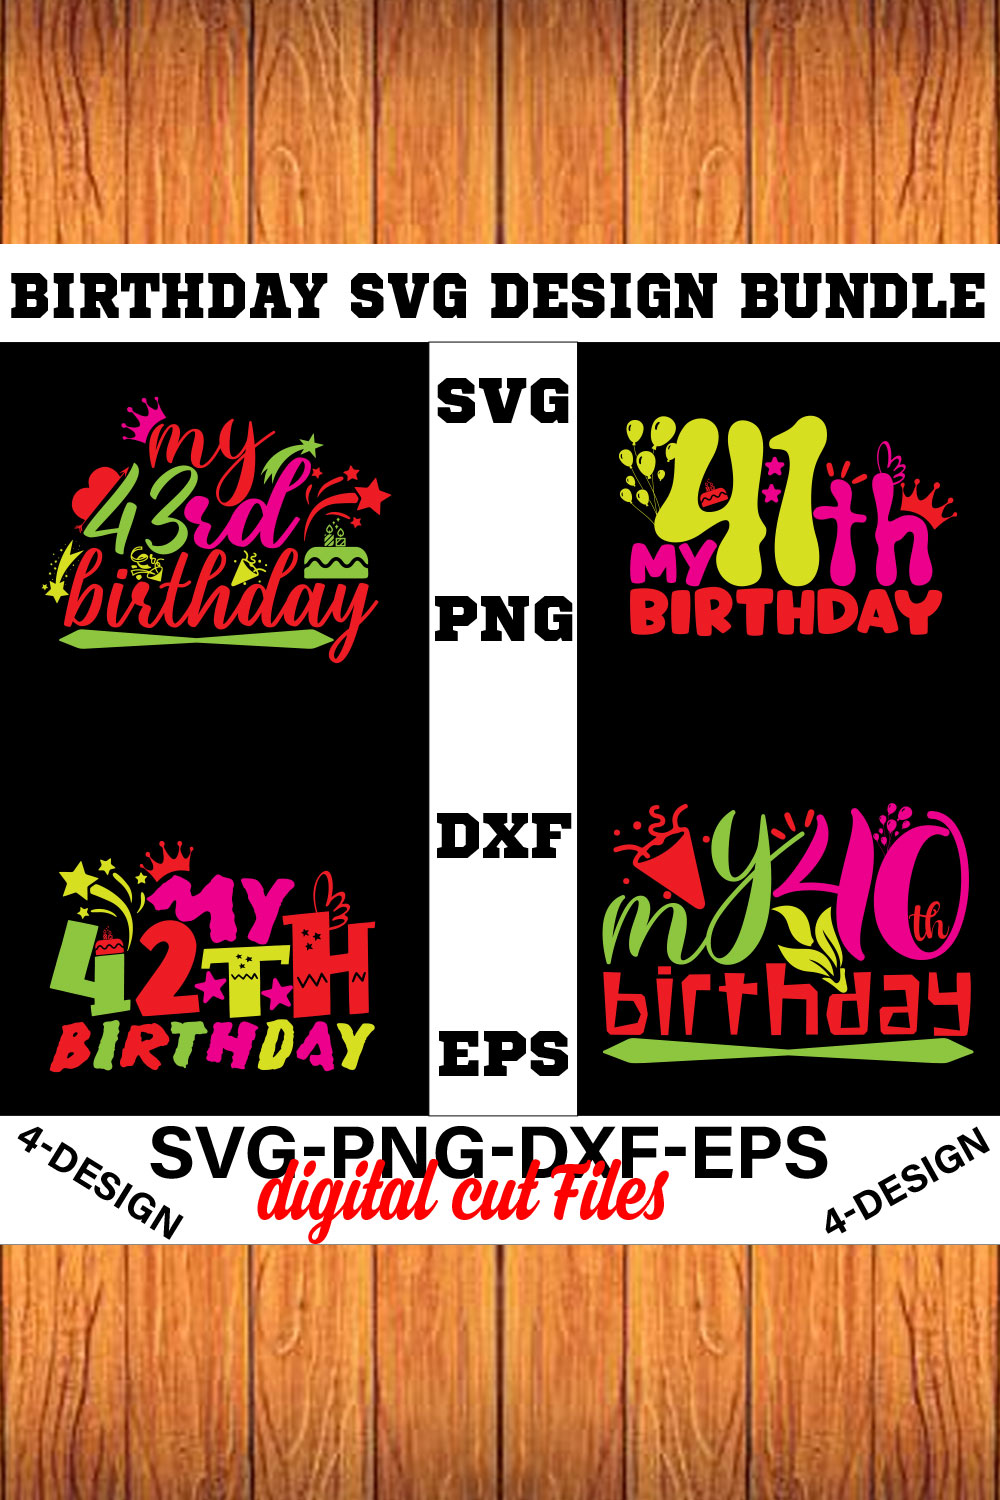 birthday svg design bundle Happy birthday svg bundle hand lettered birthday svg birthday party svg Volume-11 pinterest preview image.